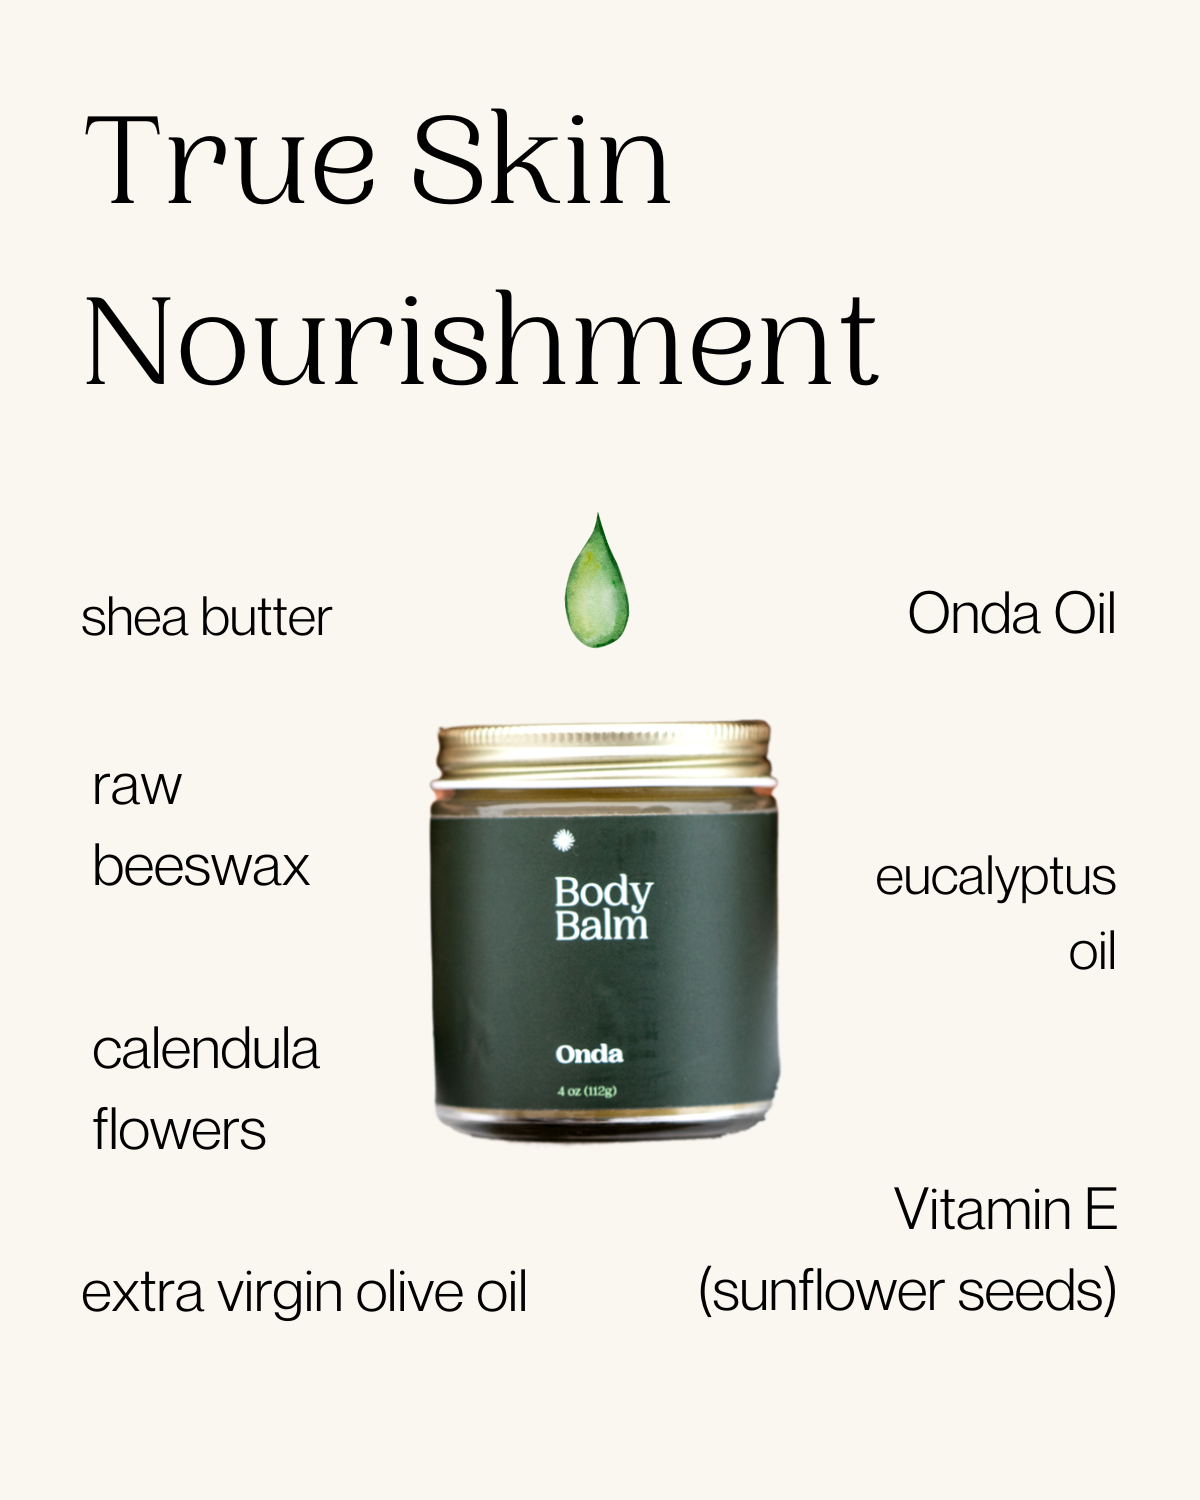 True Skin Nourishment